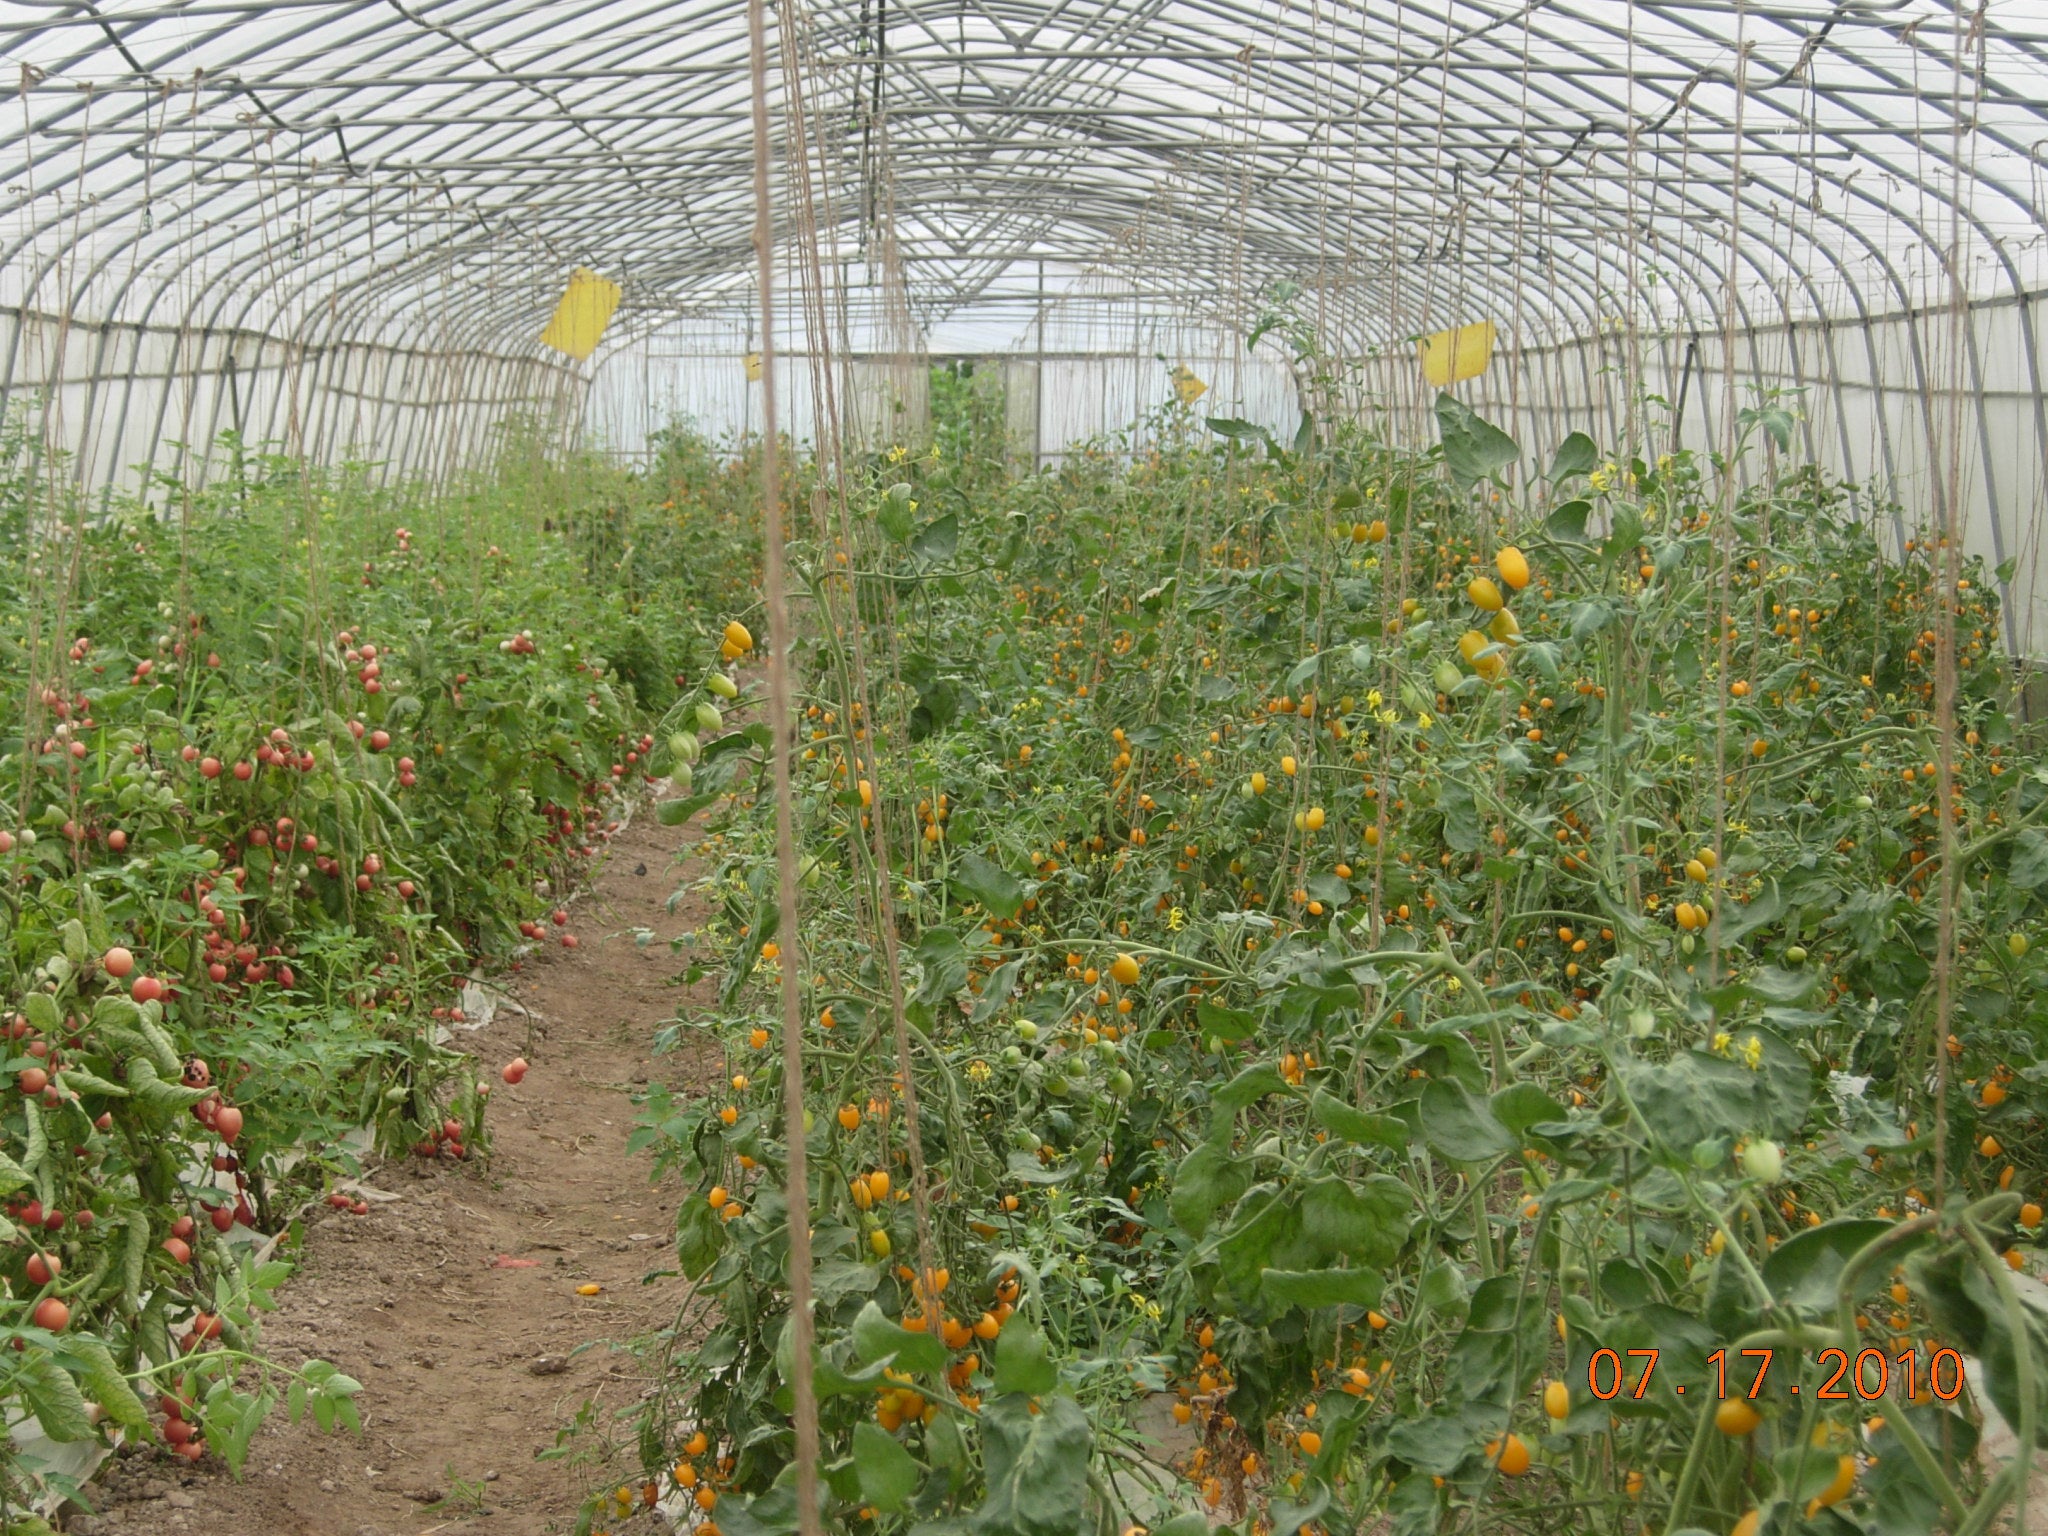 Growing organic tomato at Biofarm